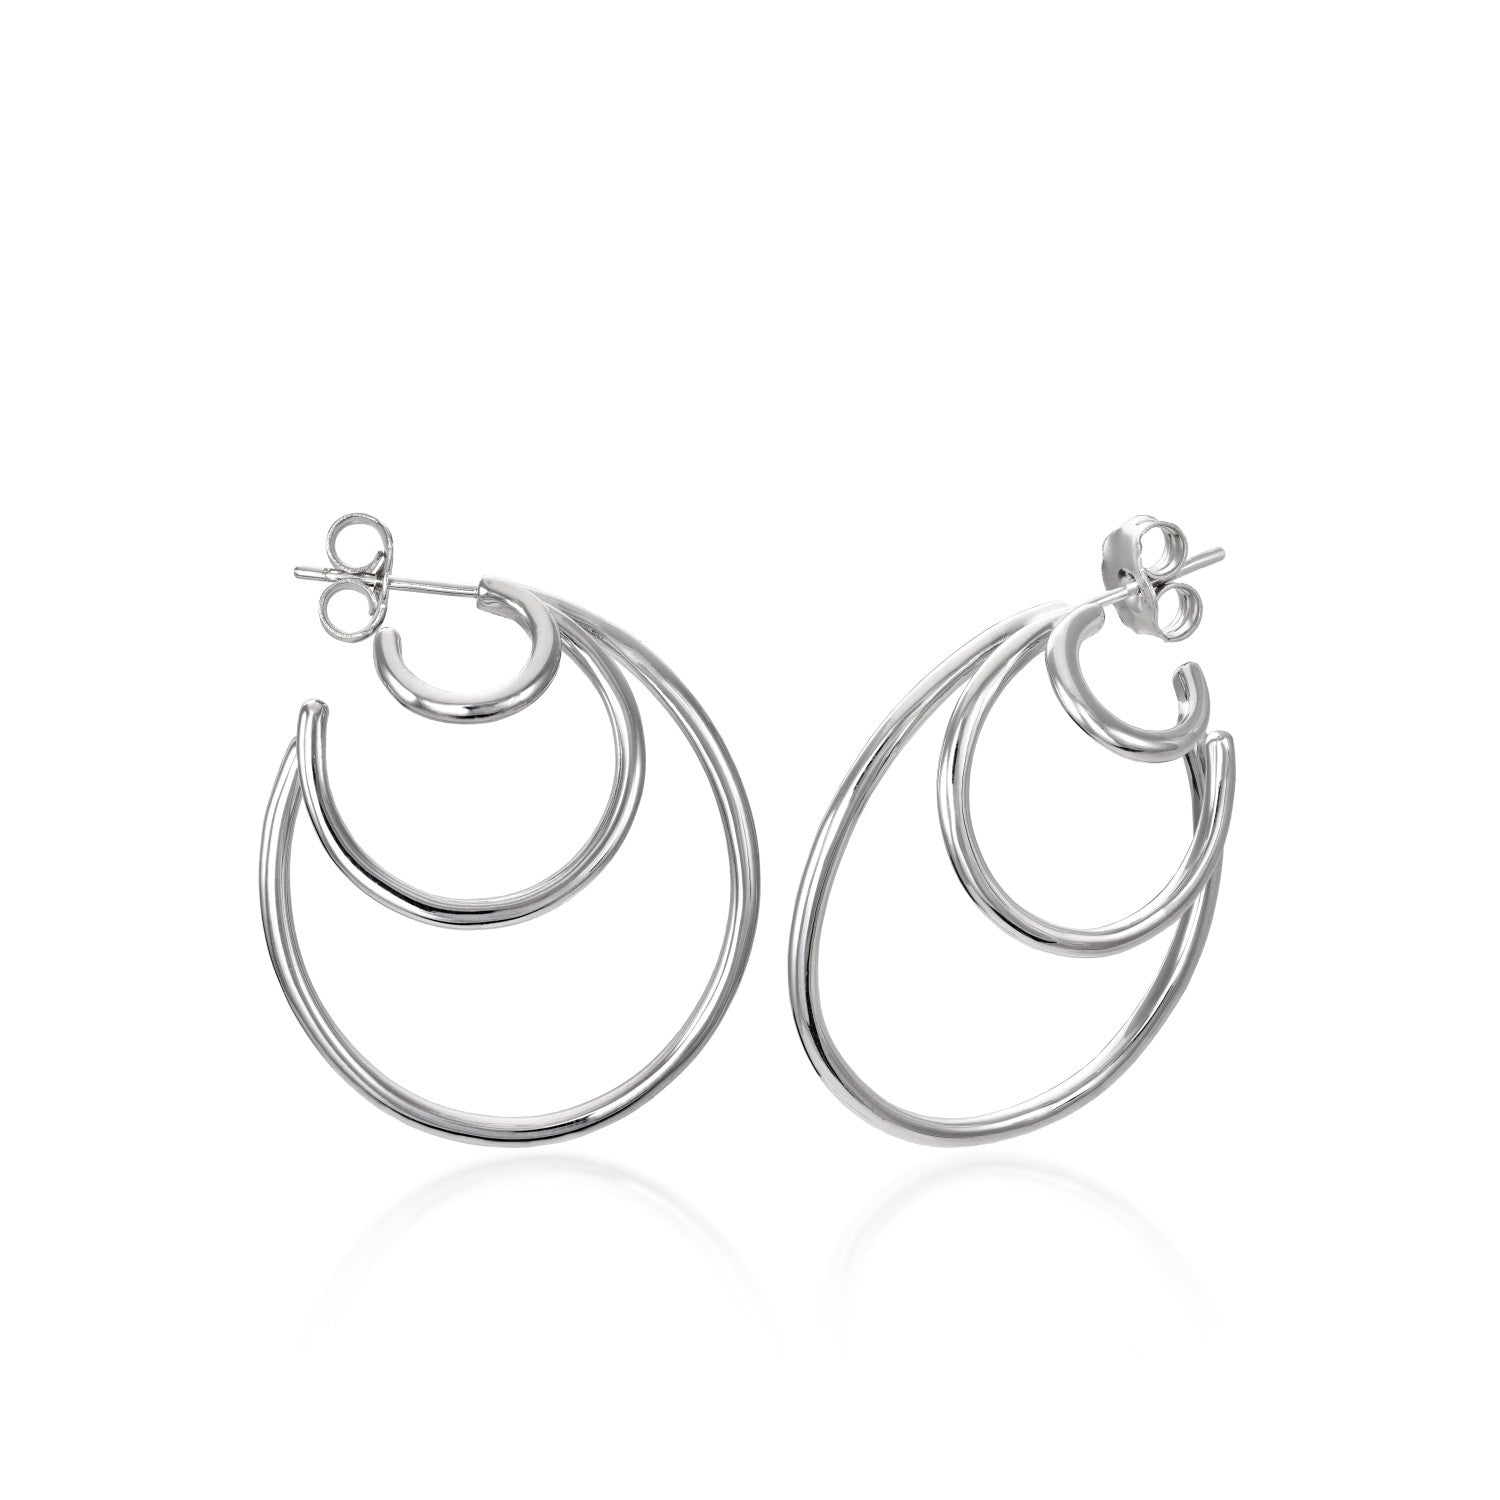 Triple hoop earrings in different sizes